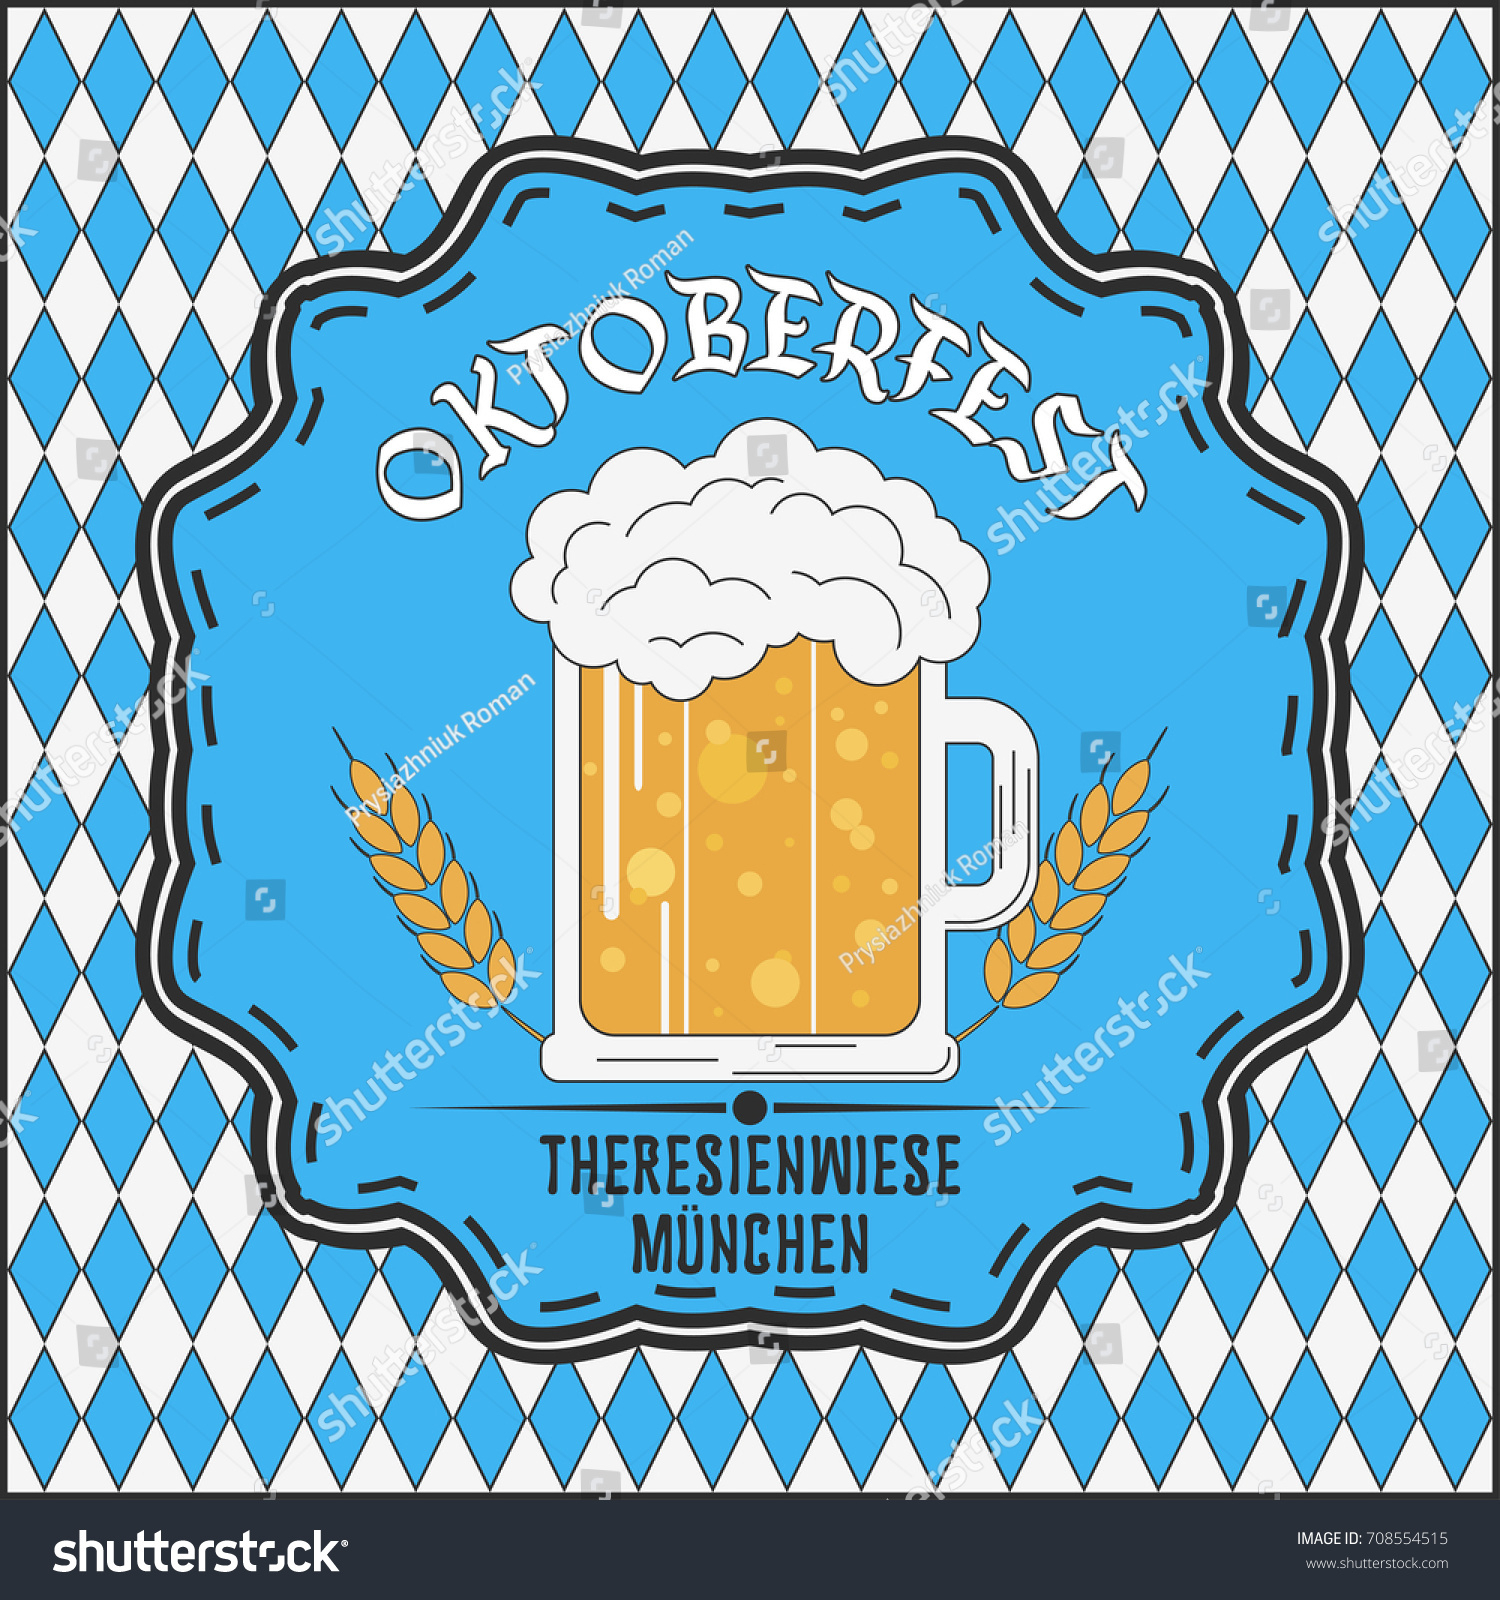 Oktoberfest Beer Festival Card Template Advertising | Food With Advertising Card Template